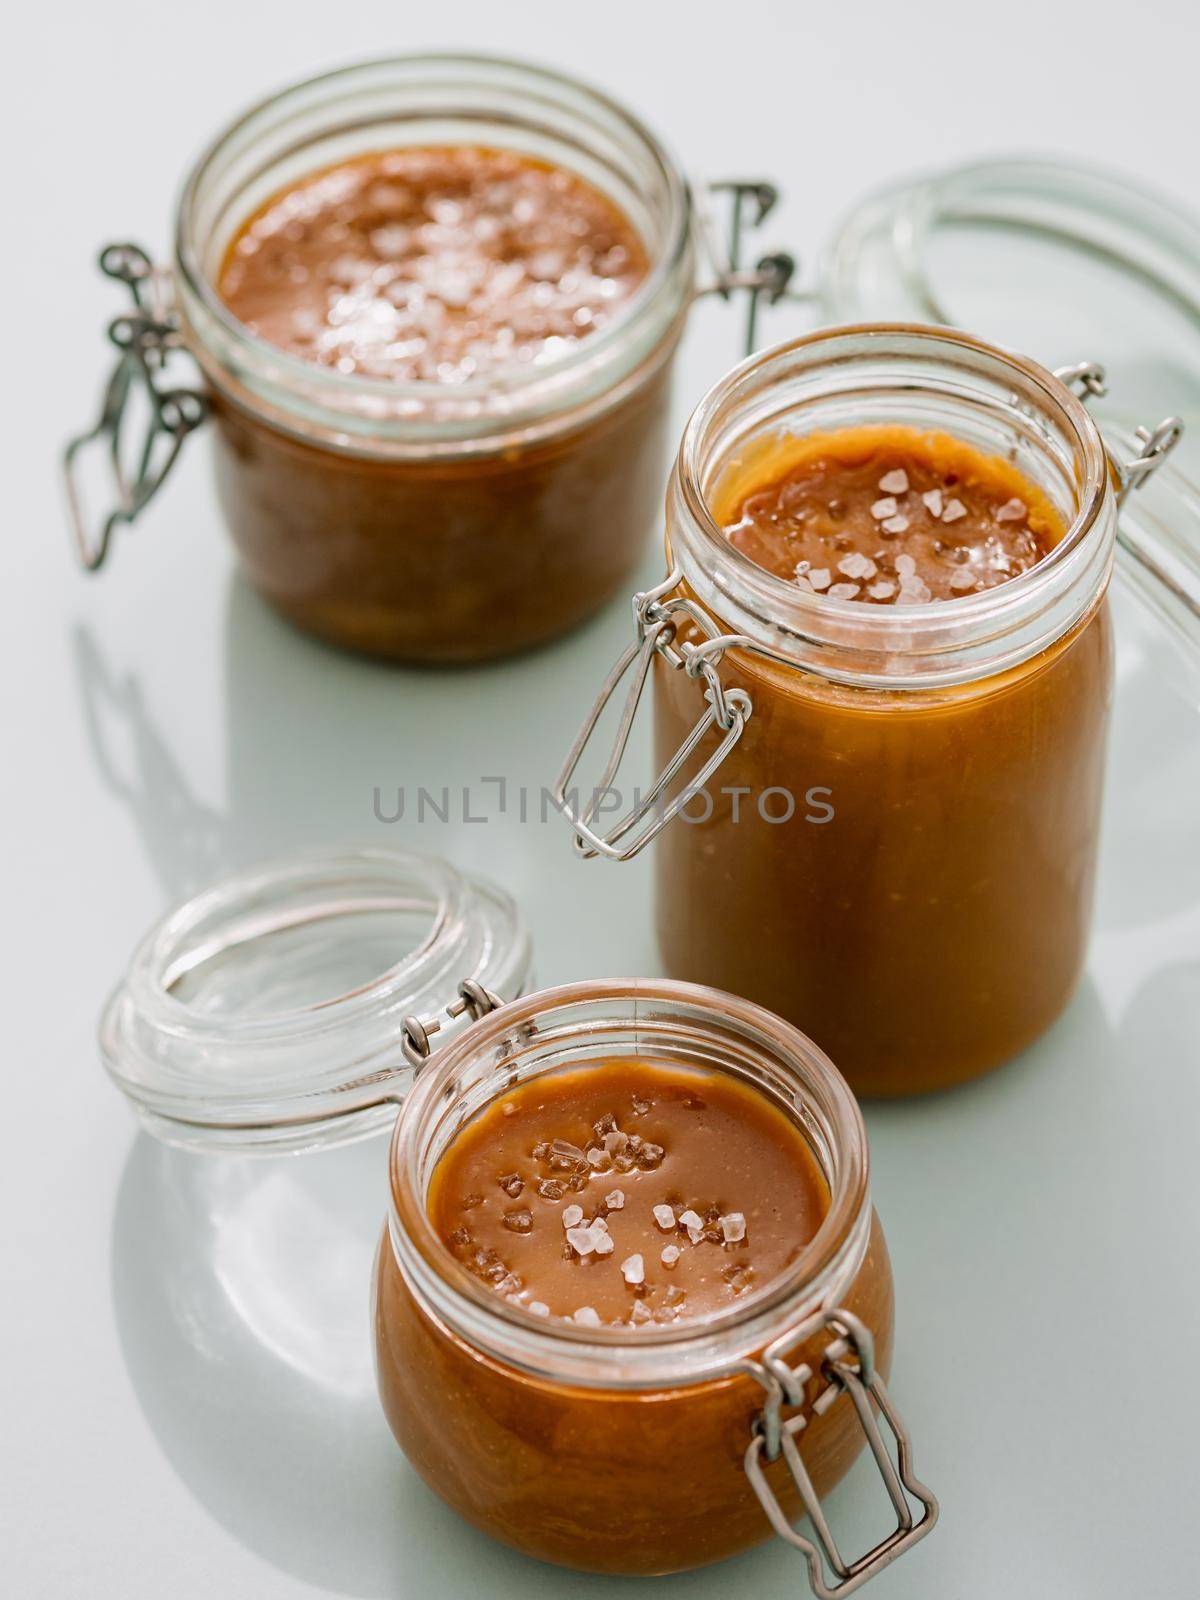 Salted caramel in glass jars. Vertical by fascinadora